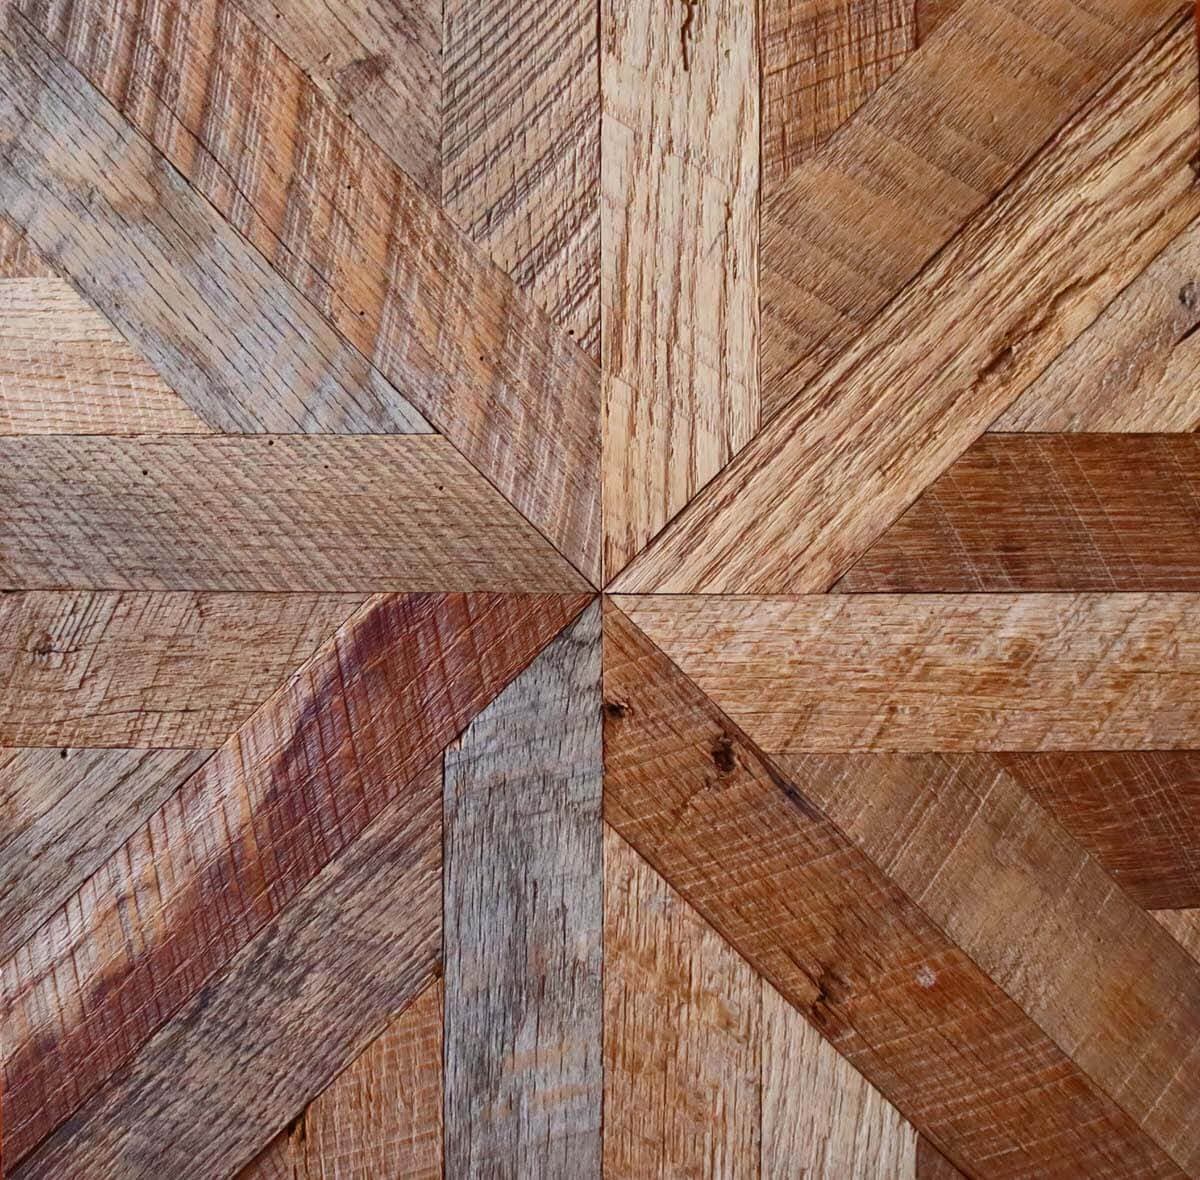 Engineered reclaimed wood tile in star pattern.